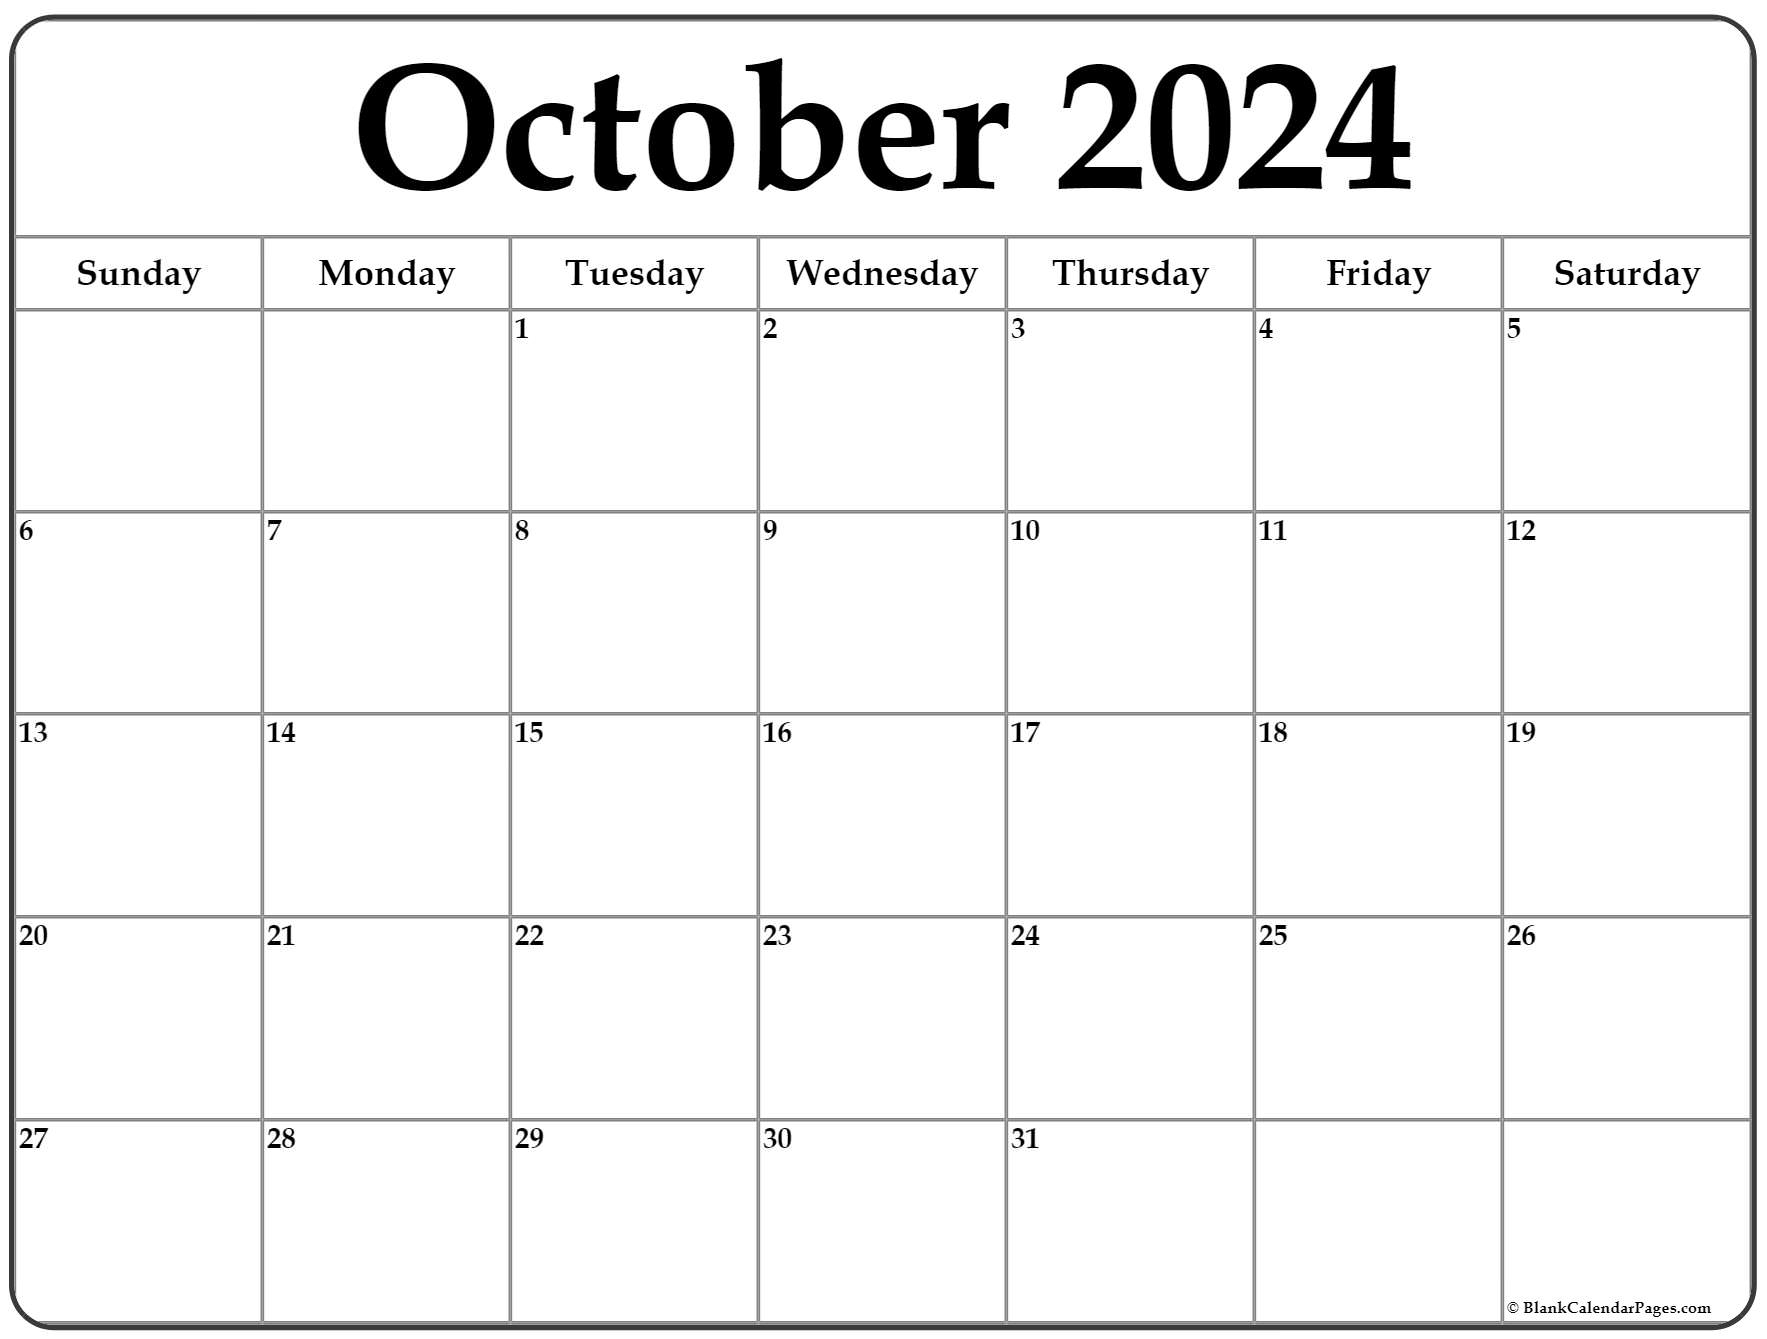 October 2024 Calendar | Free Printable Calendar for October 2024 Free Printable Calendar